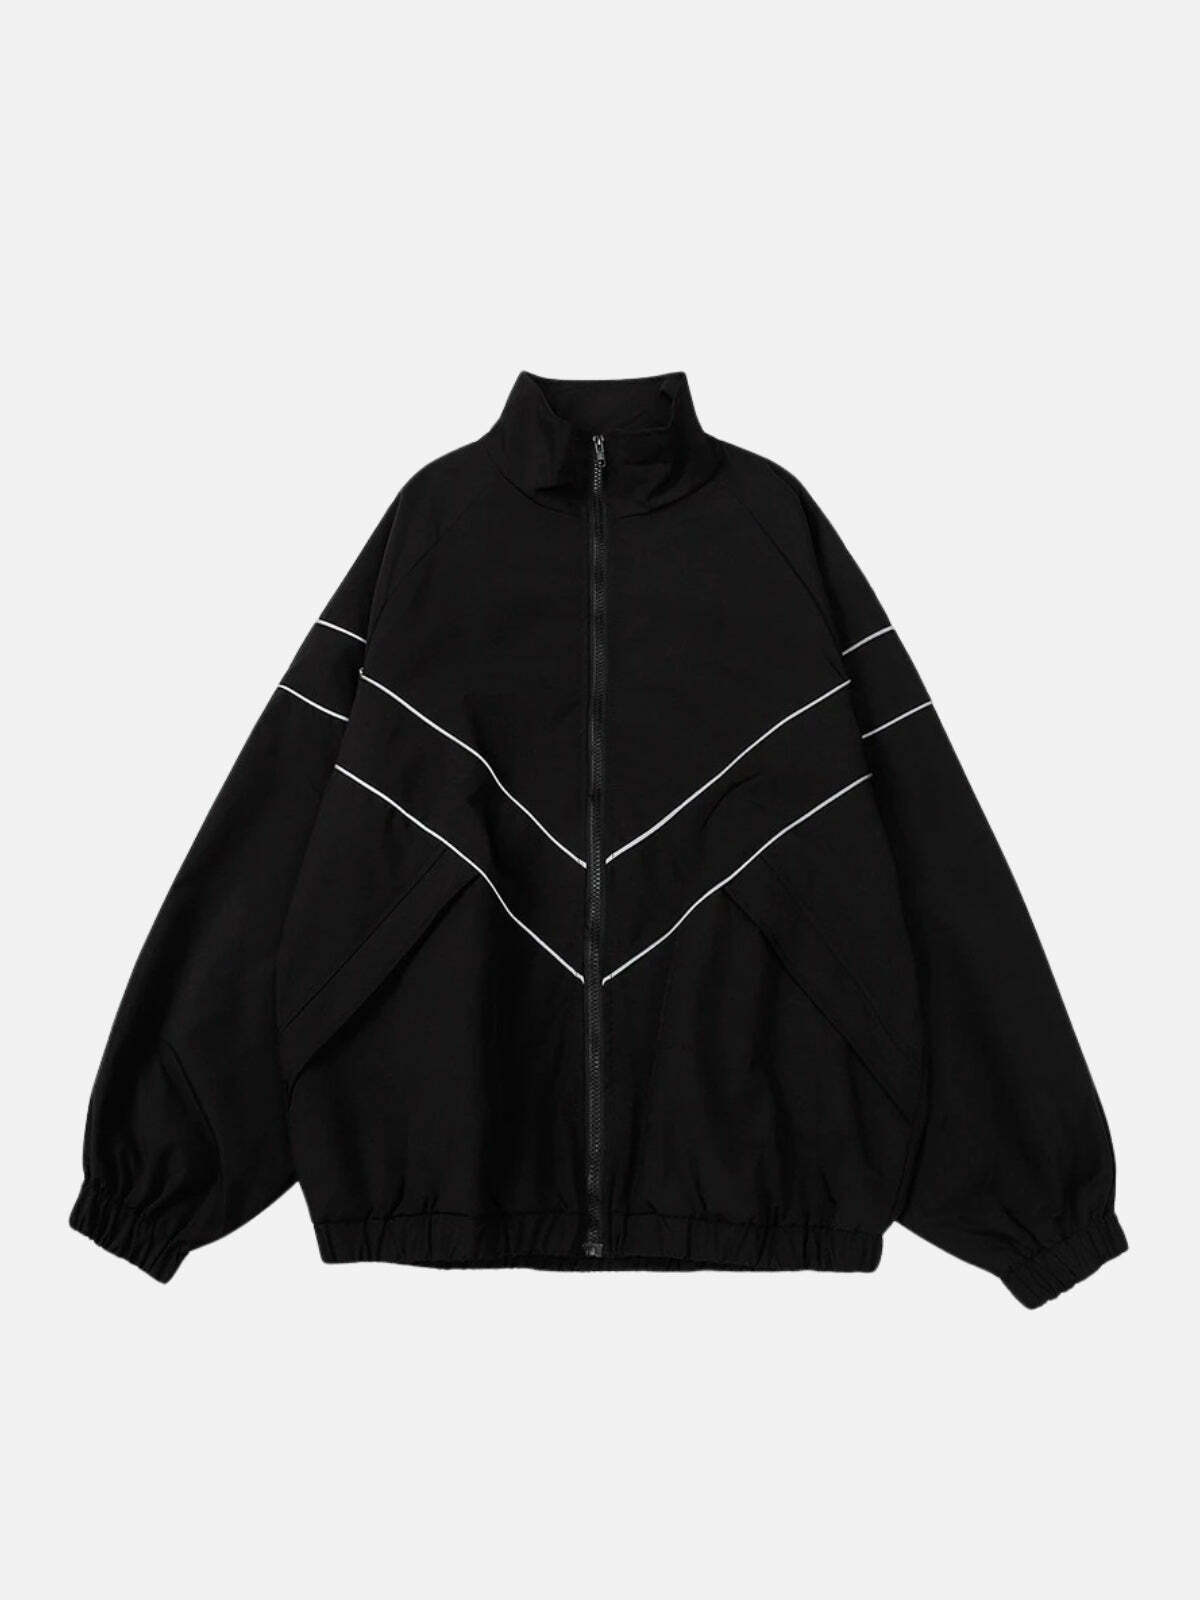 reflective striped jacket edgy & urban streetwear 3139